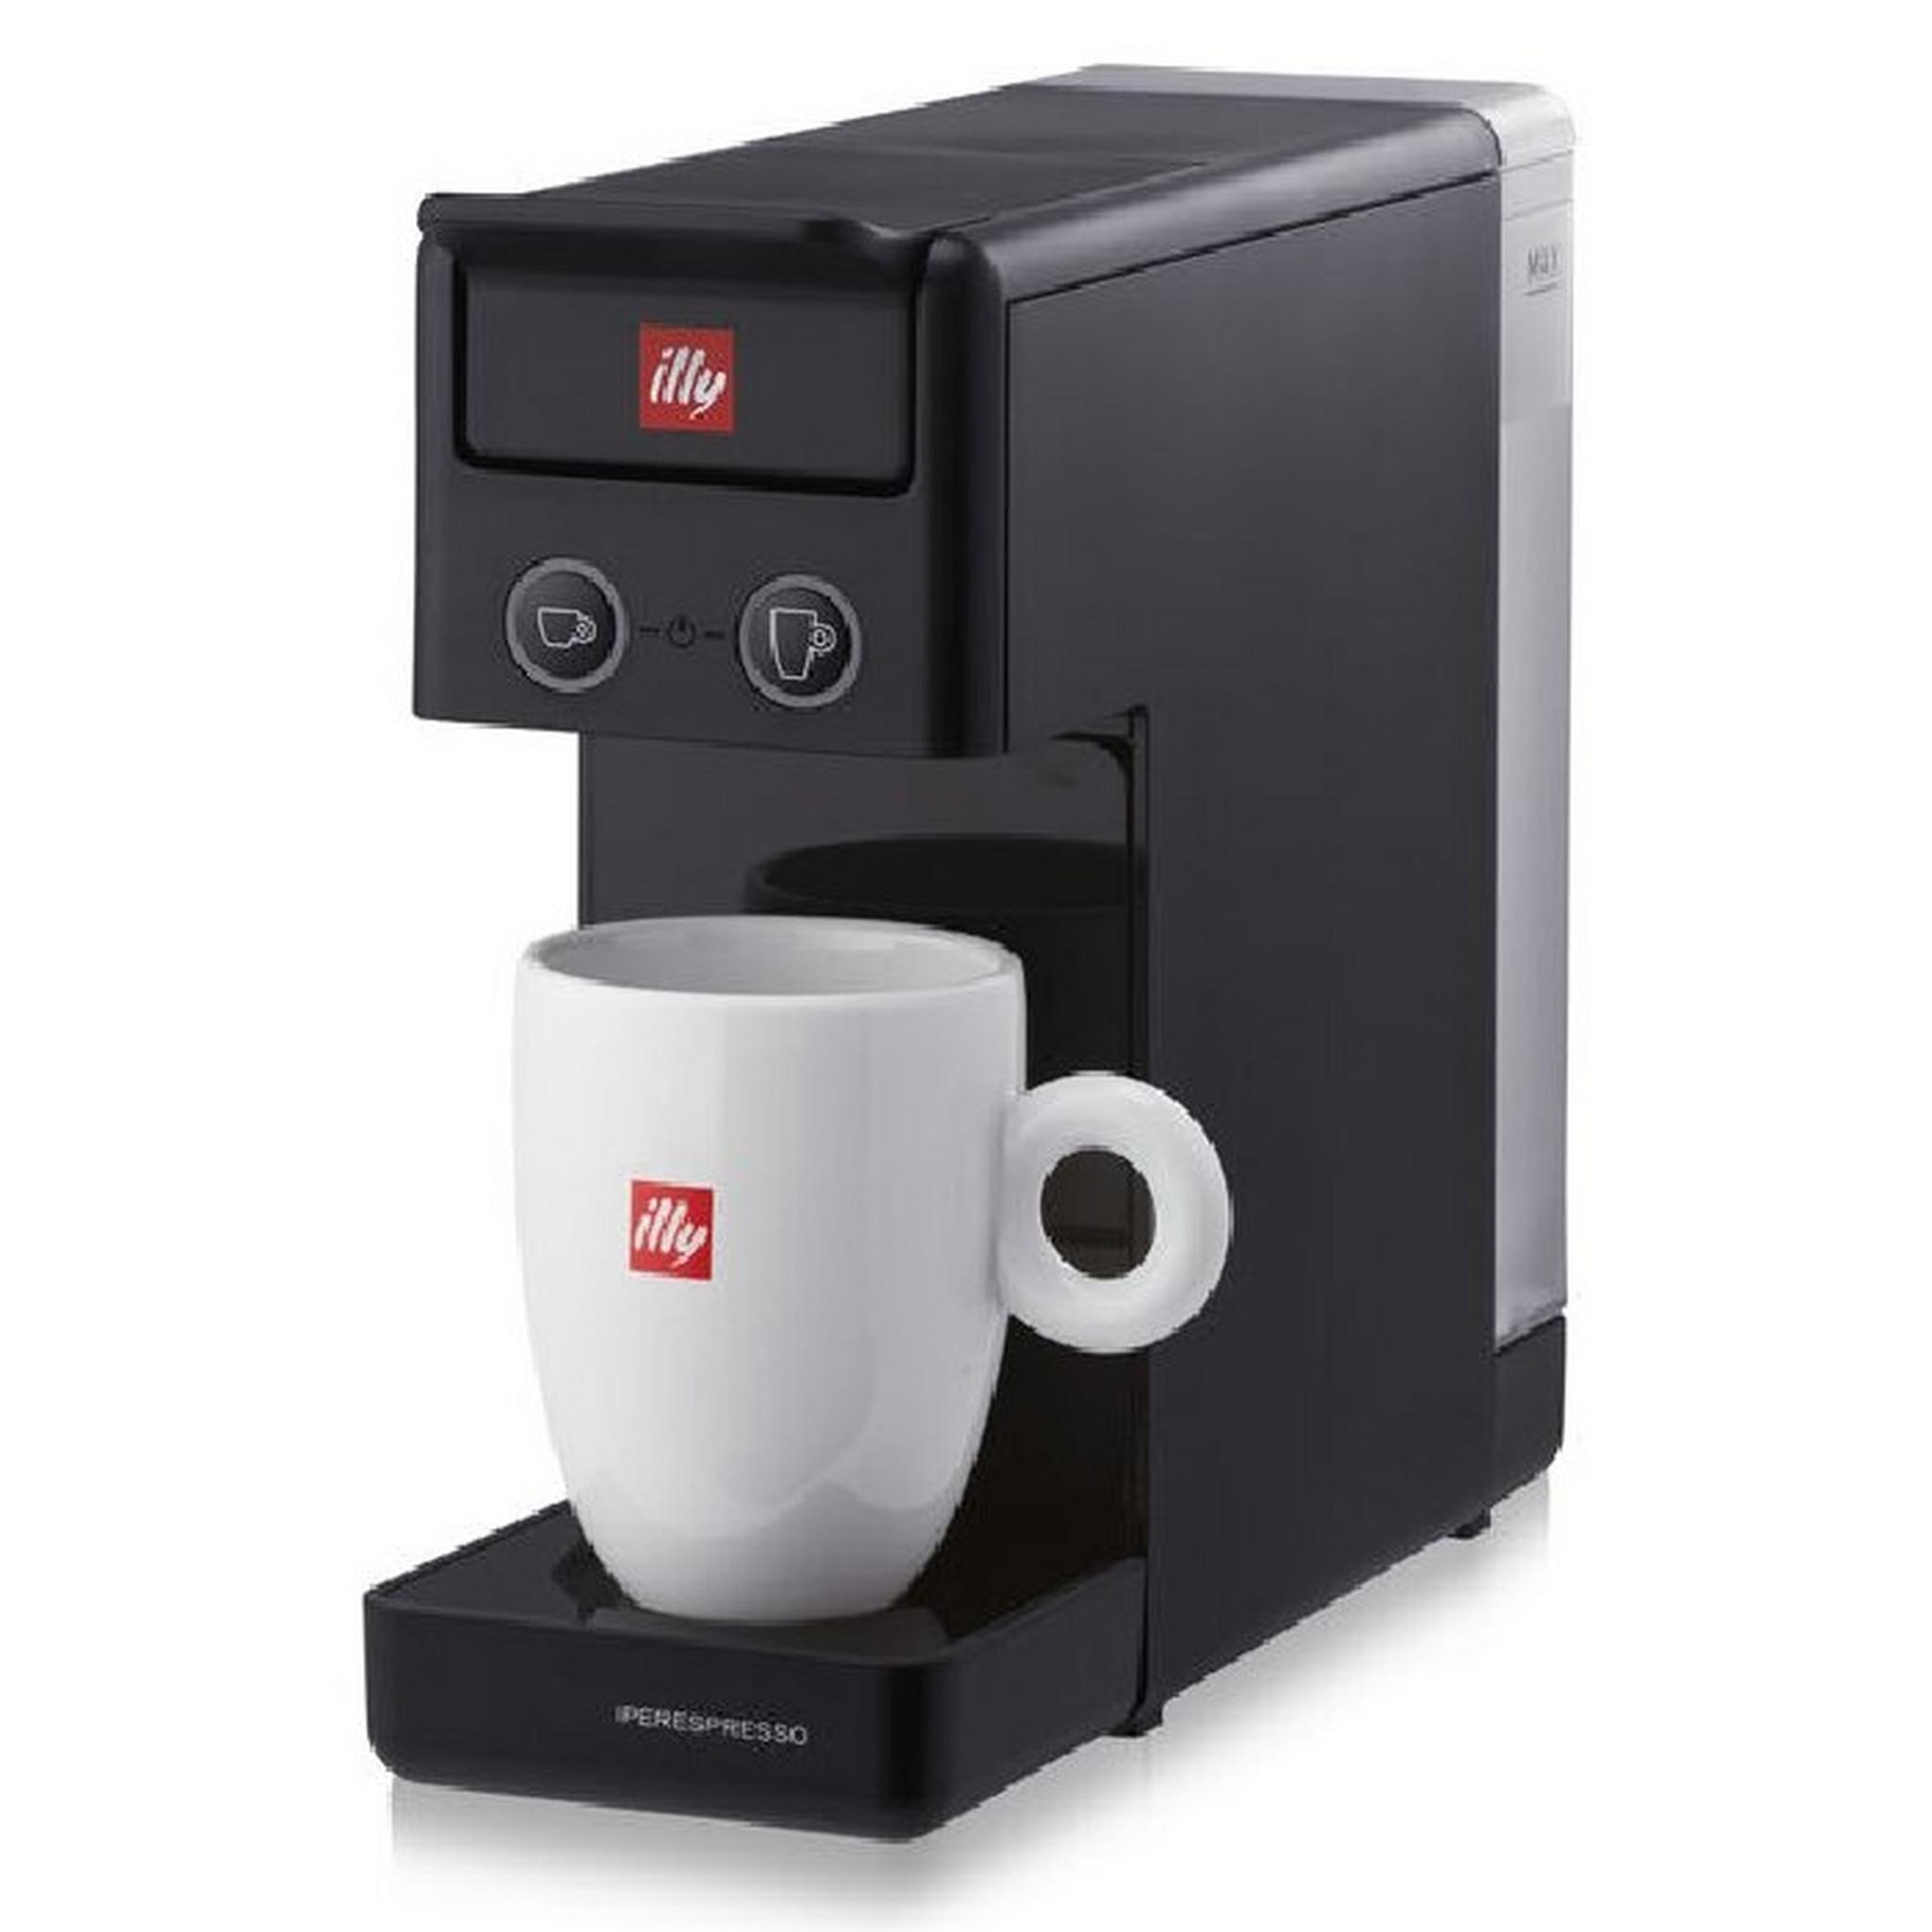 illy Coffee Machine iperEspresso (60374) - Black